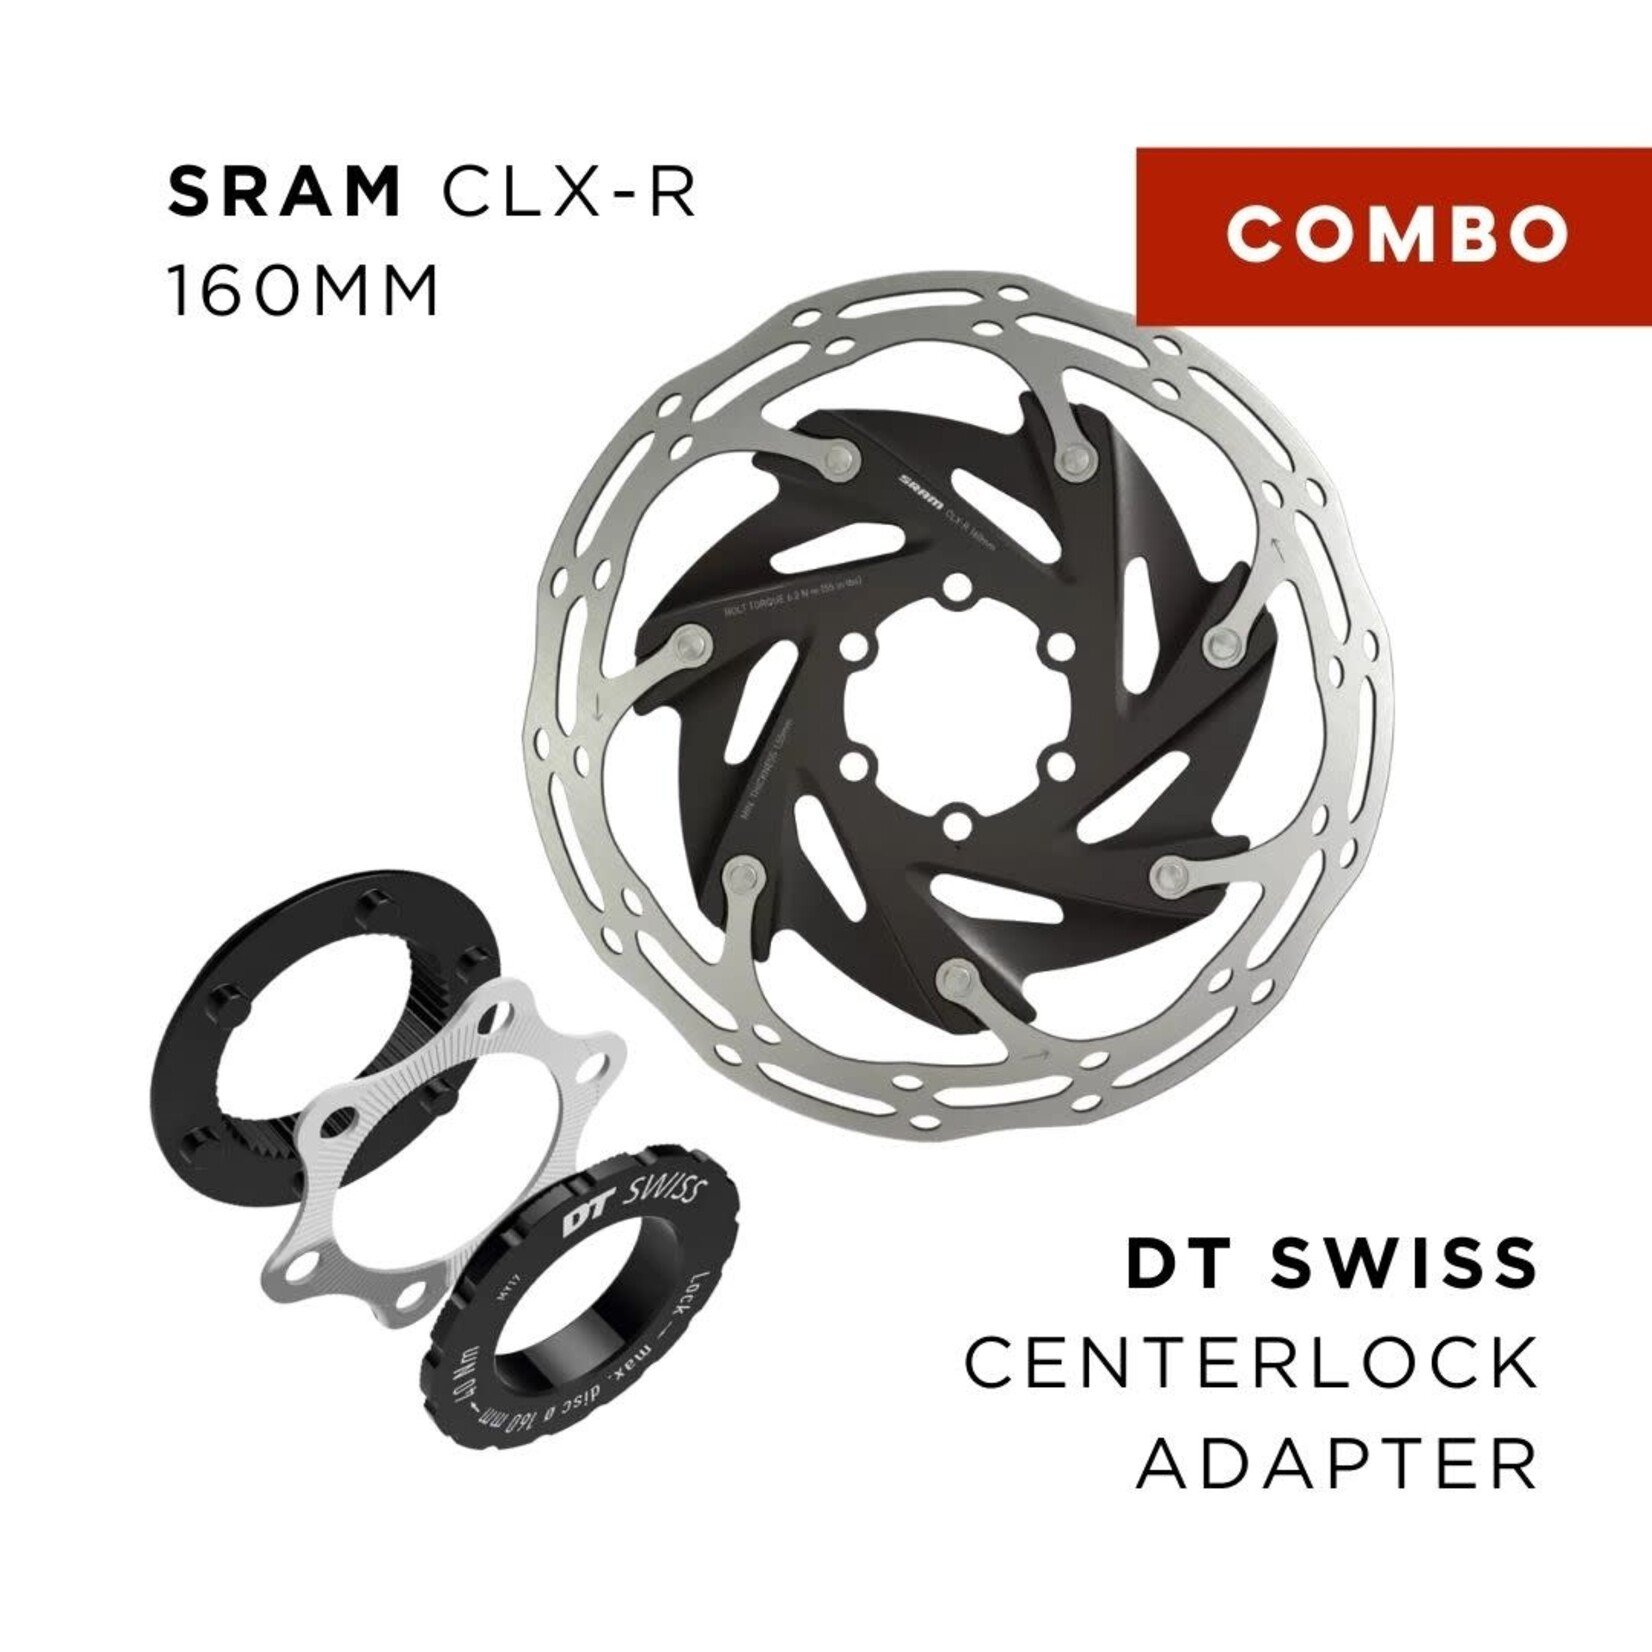 SRAM SRAM CLX-R 160mm & DT Swiss Adapter - Combo